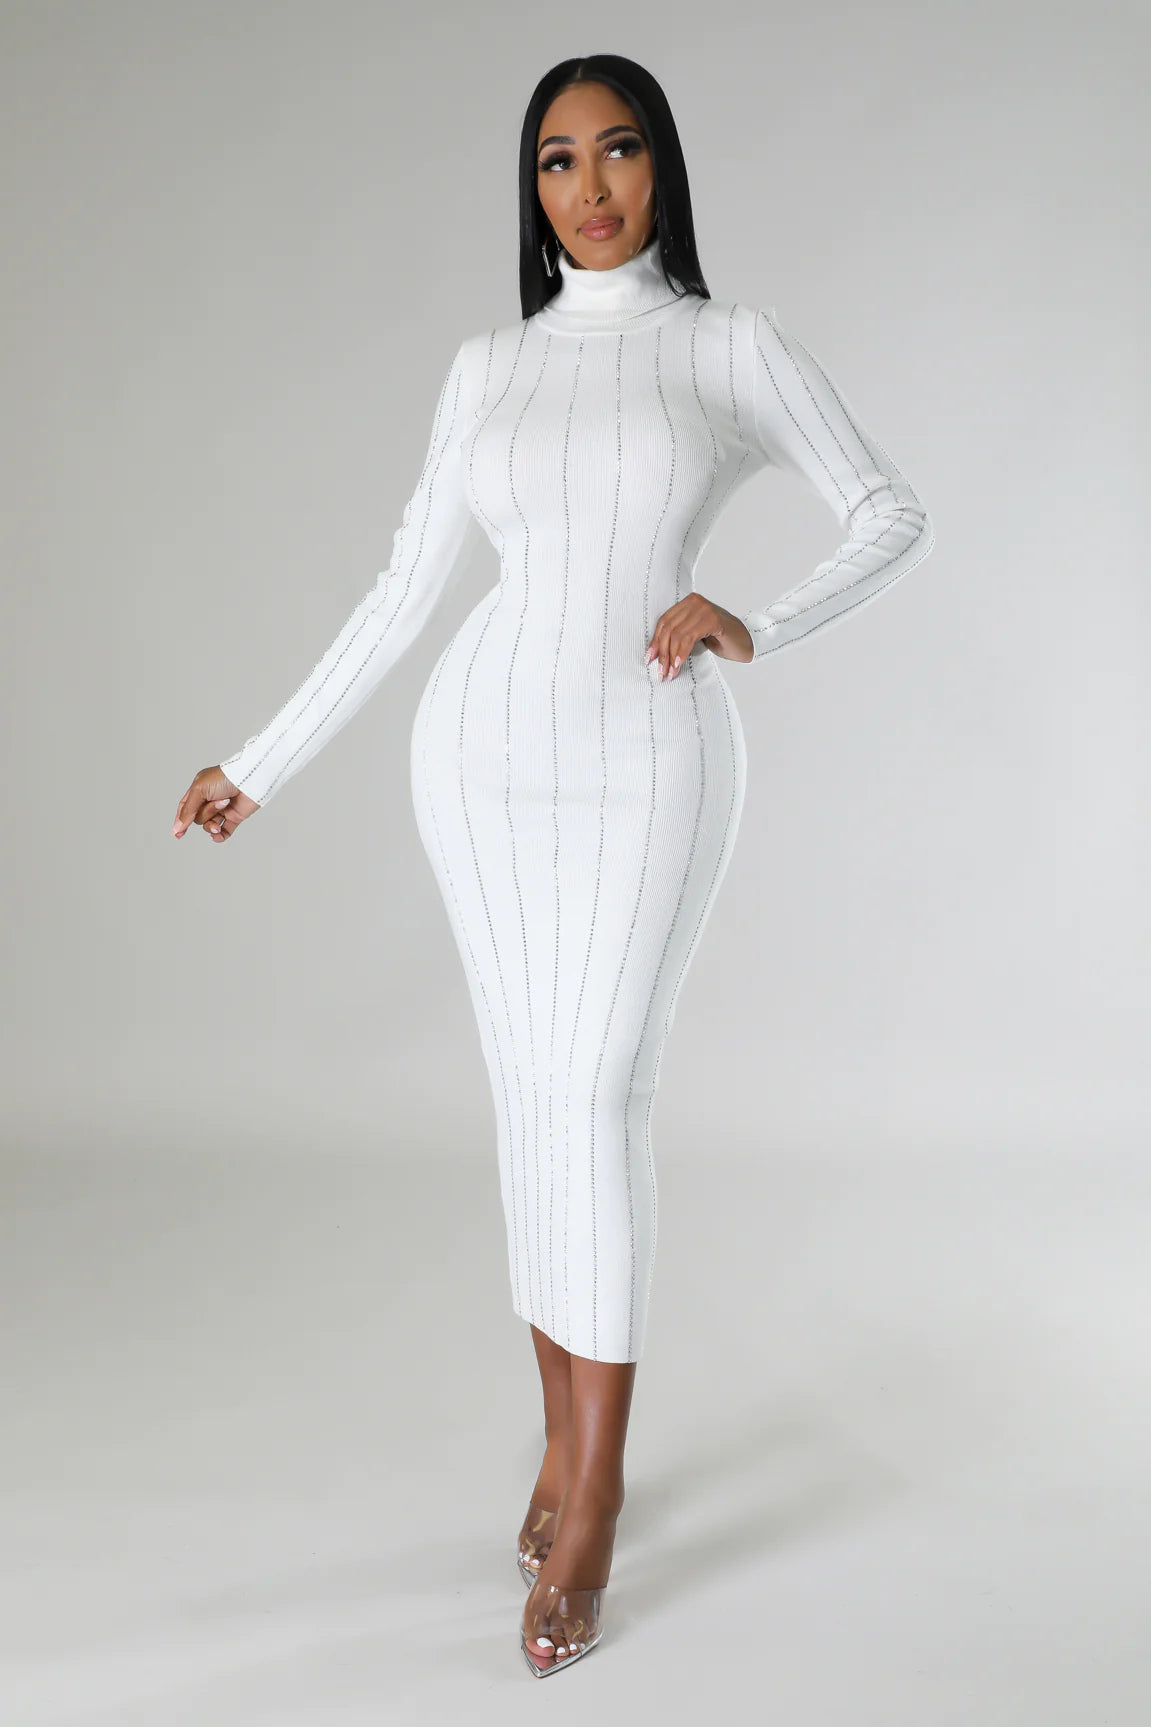 SHIMMERING RHINESTONE DRESS White - On the Runway Fashion